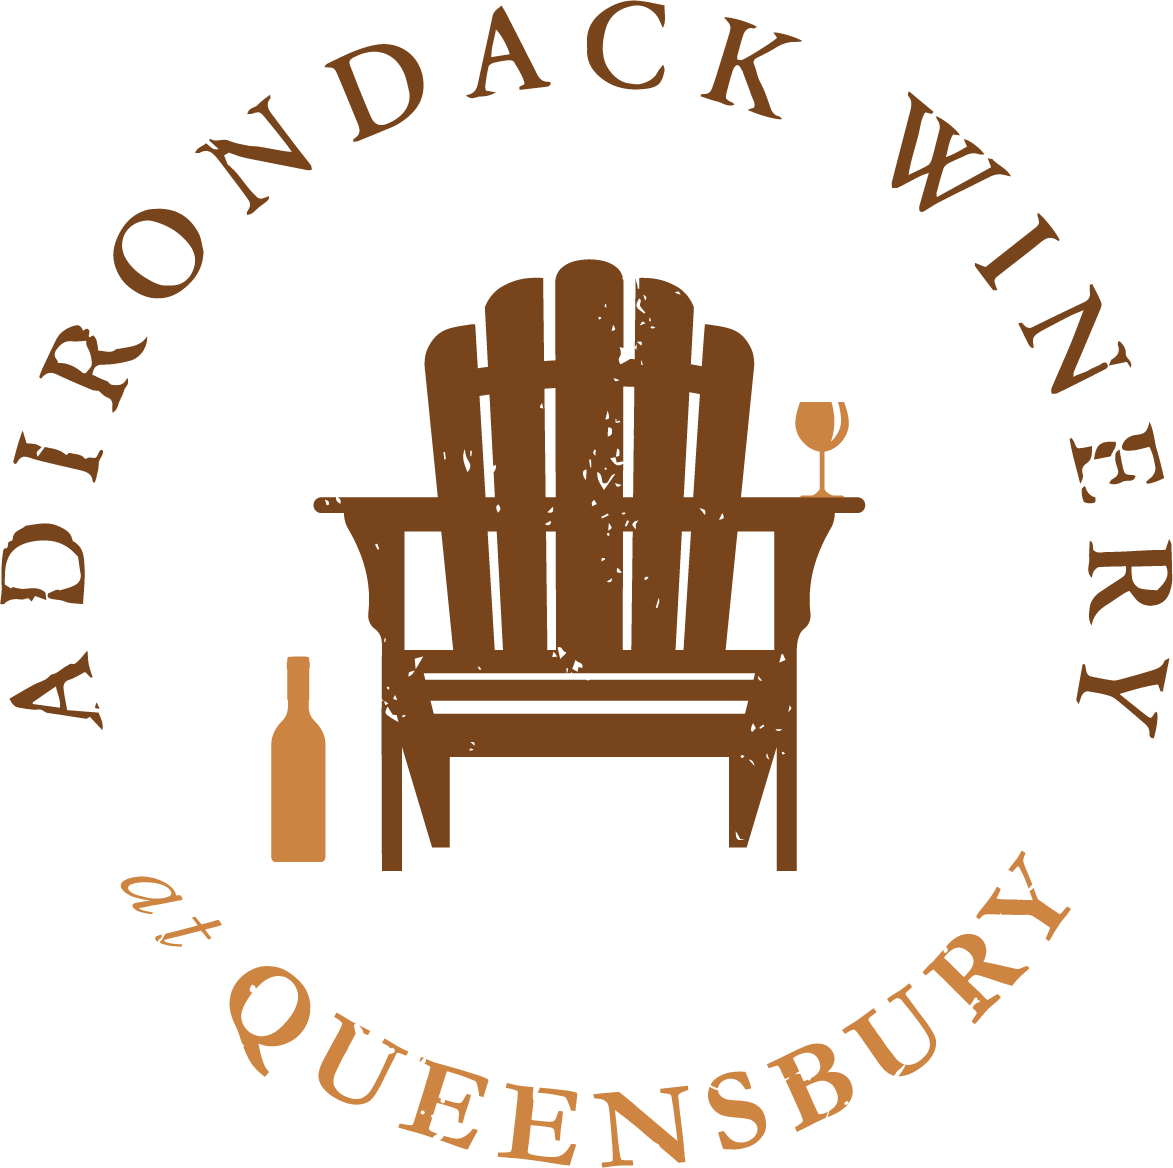 Adirondack Winery - Products - Adirondack Winery Logo Cork Coaster